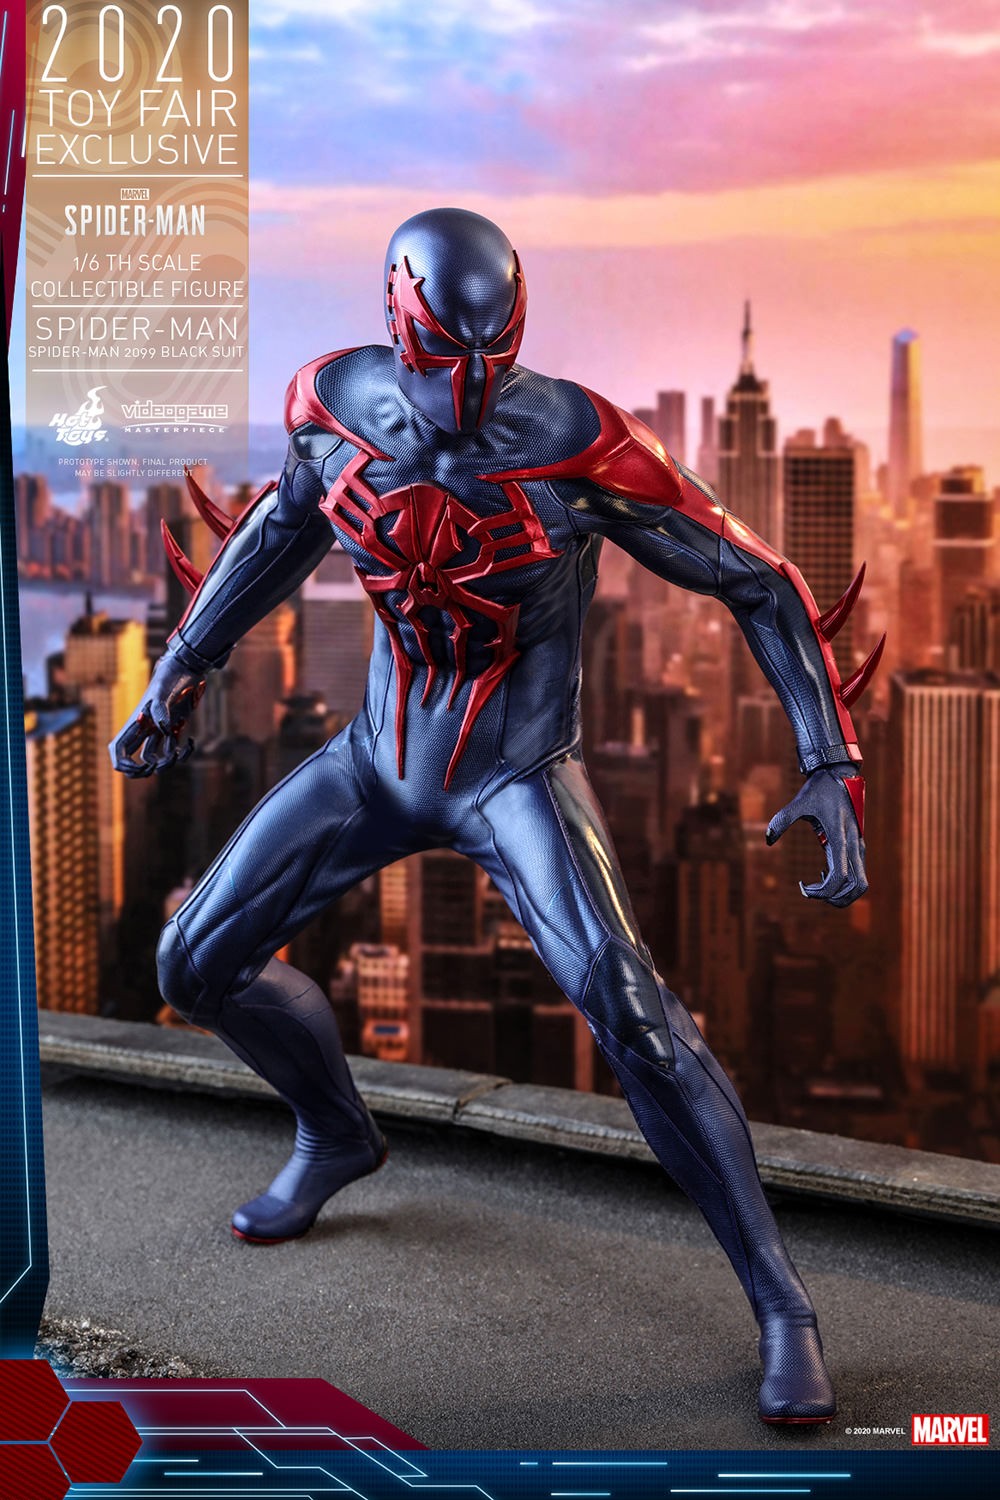 Spider-Man (Spider-Man 2099 Black Suit) Exclusive Edition (Prototype Shown) View 10